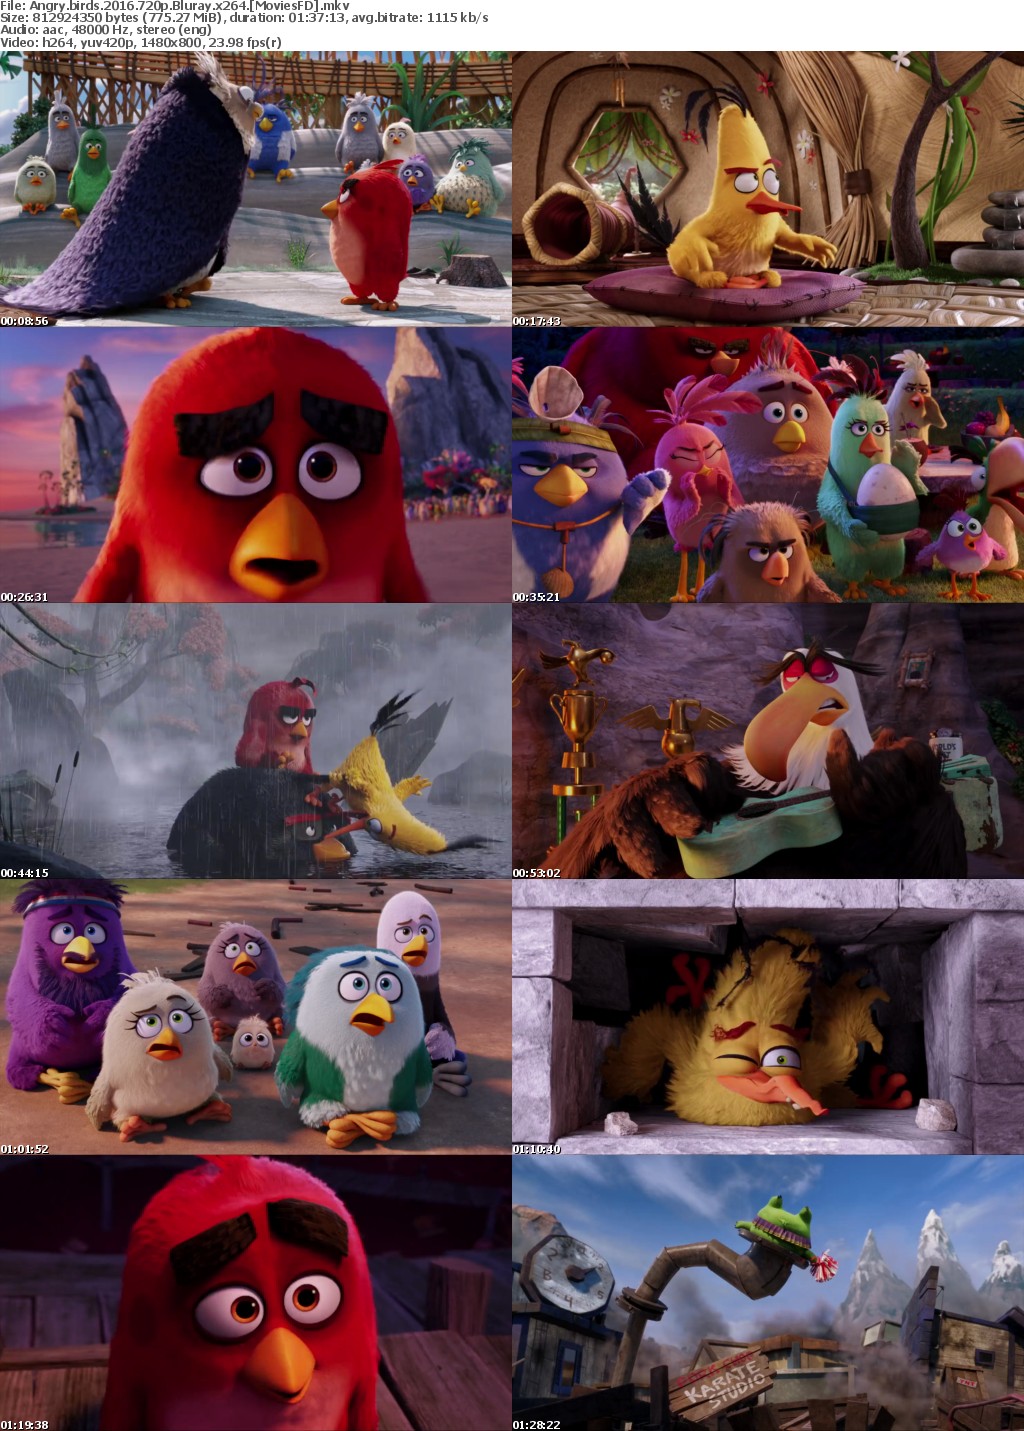 Angry Birds (2016) 720p BluRay x264 - MoviesFD